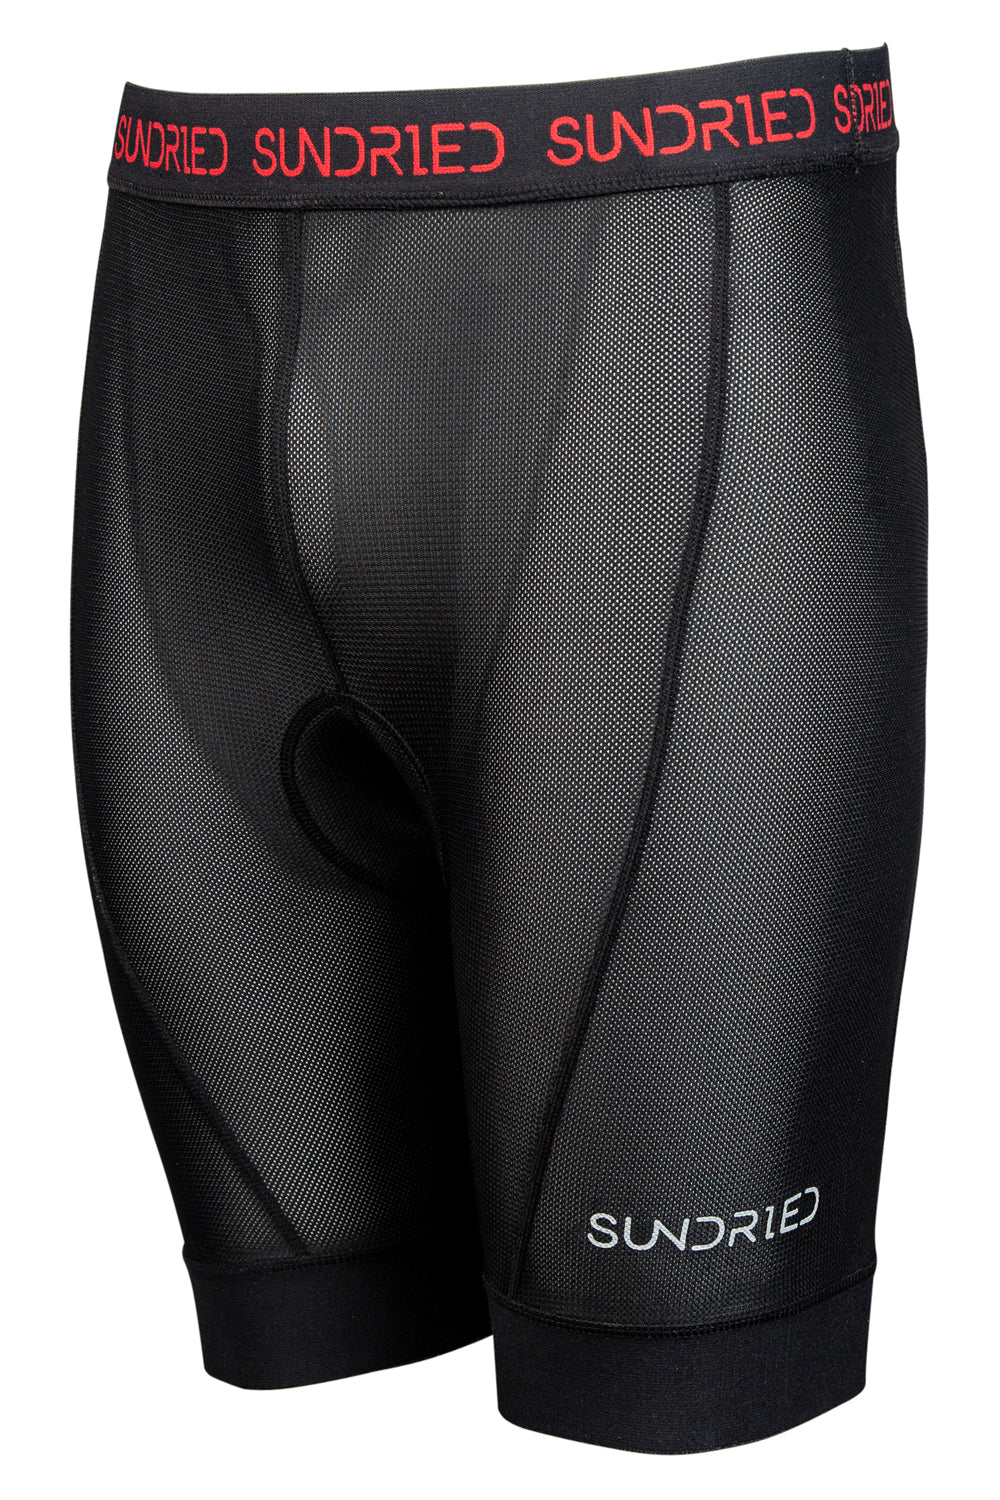 Sundried Men's Cycle Padded Boxer Shorts Shorts Activewear